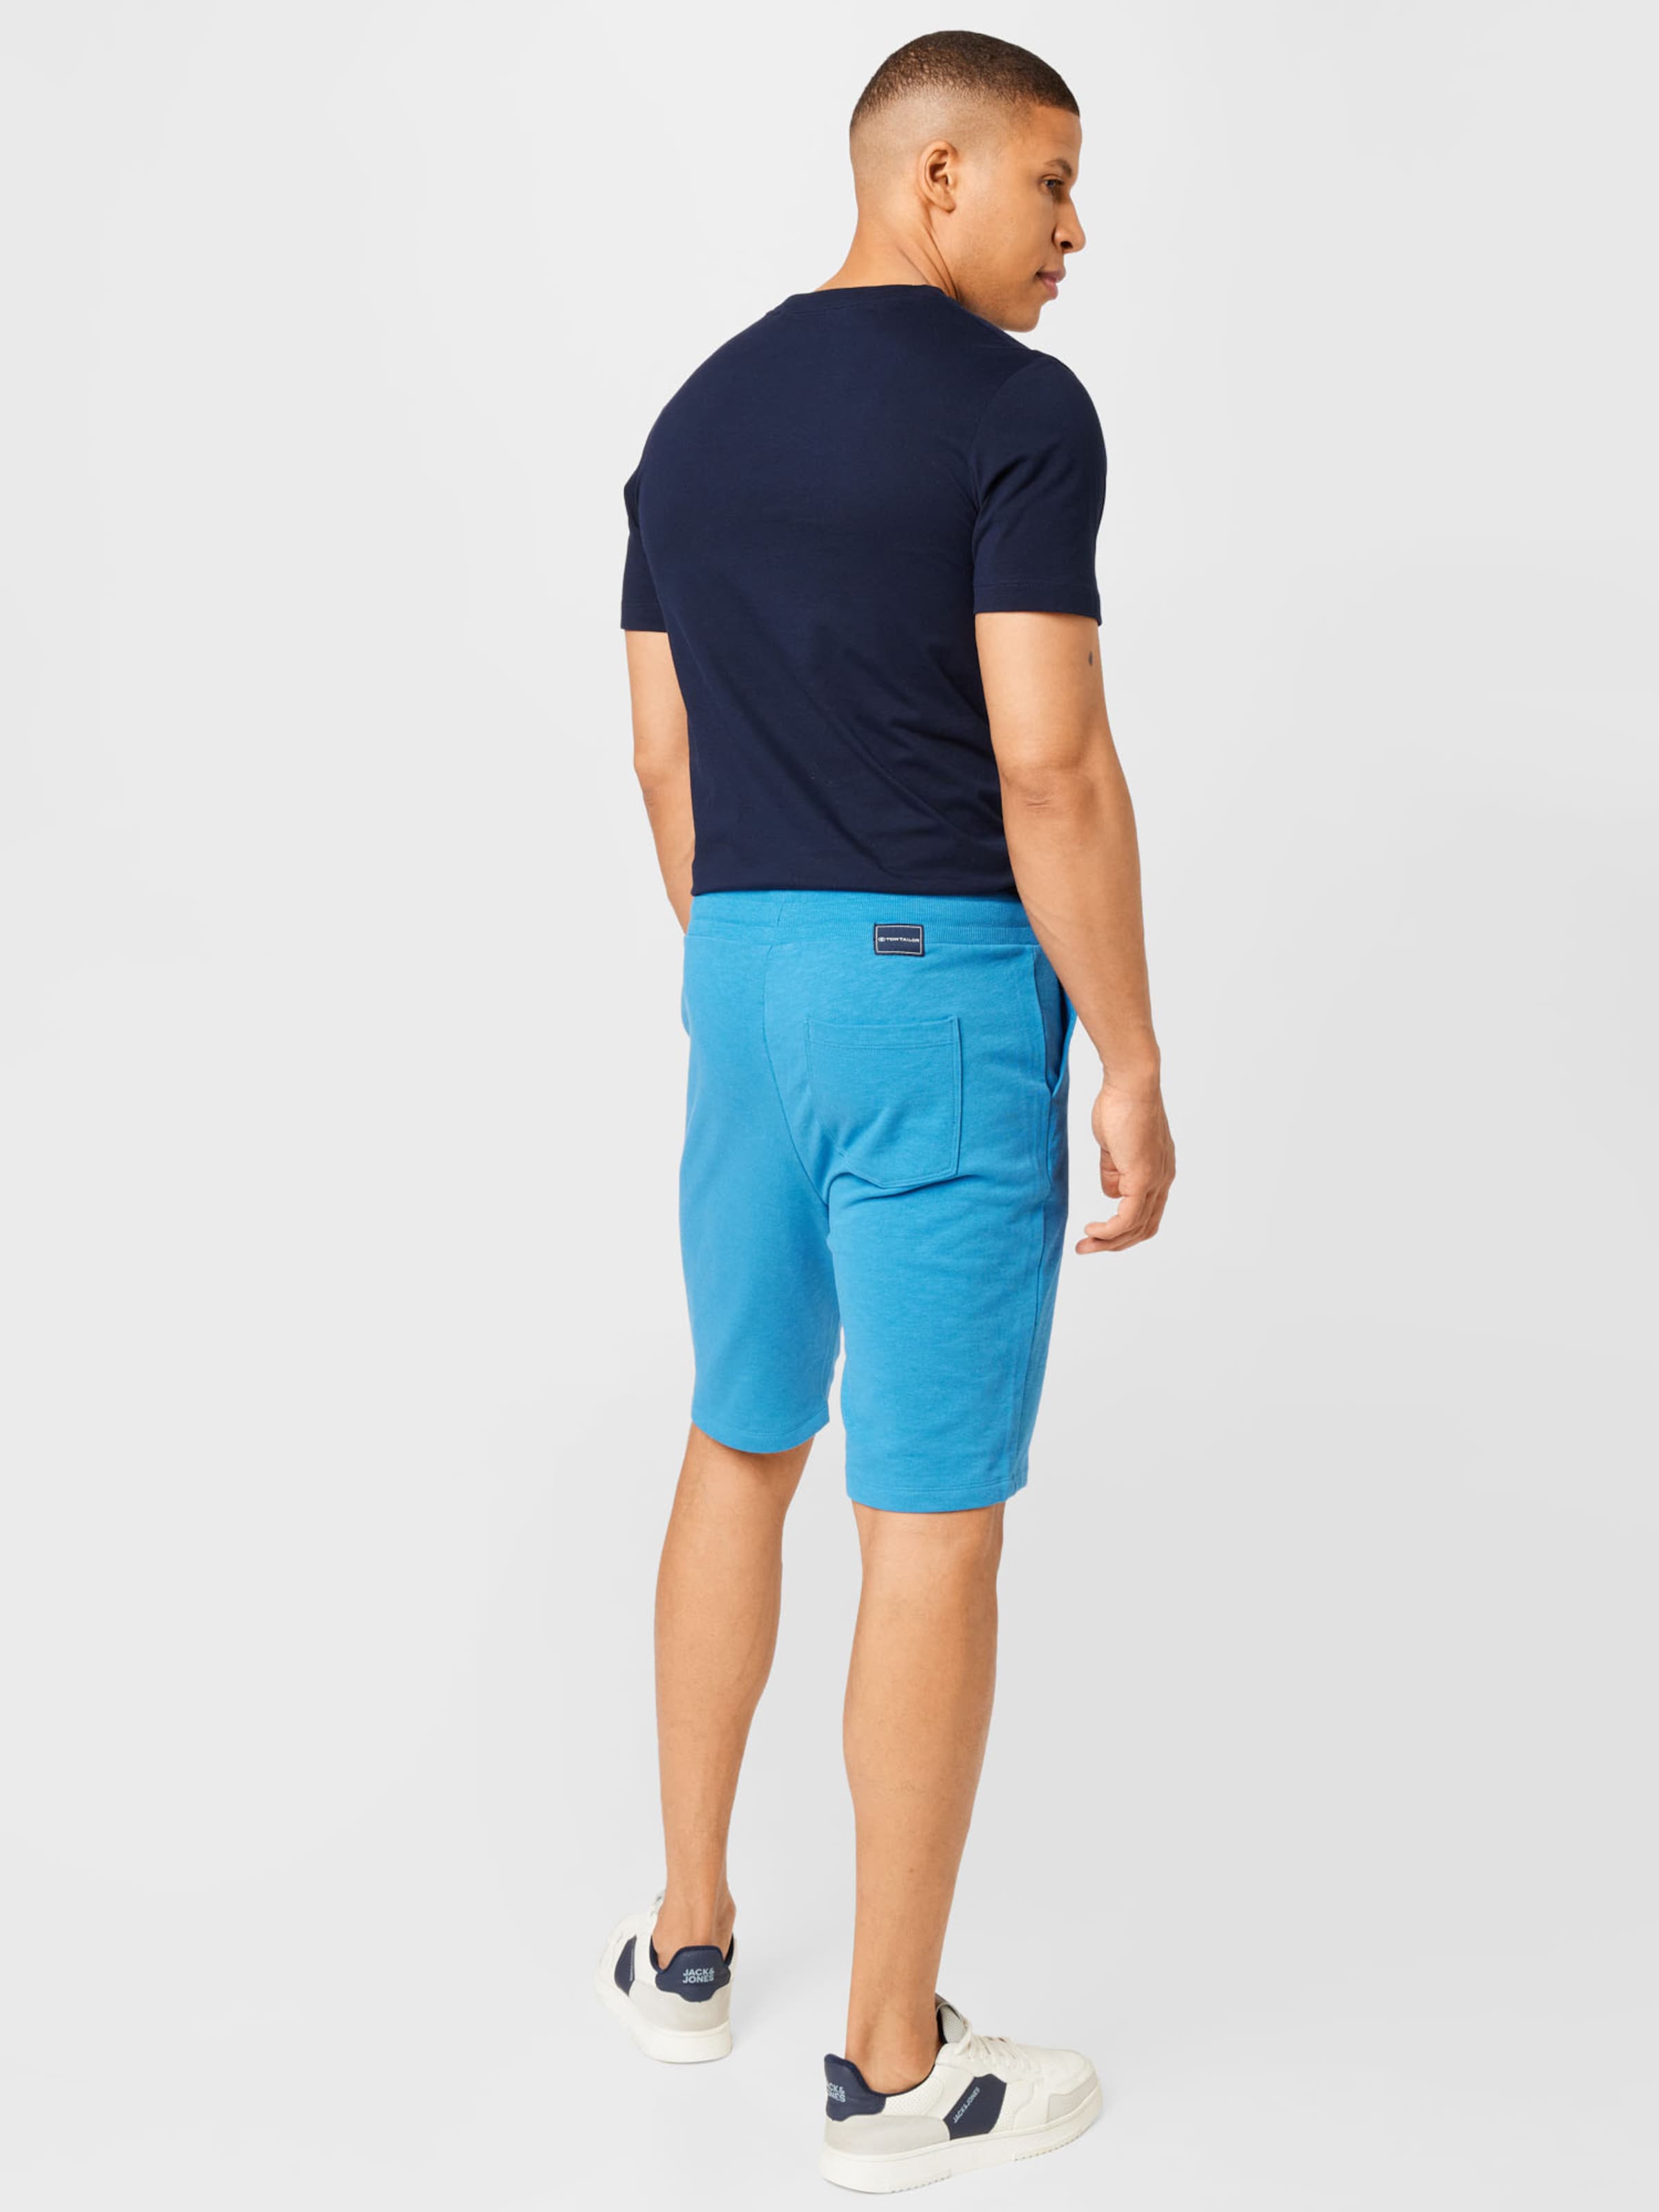 Männer Hosen TOM TAILOR Shorts in Neonblau - YC48577